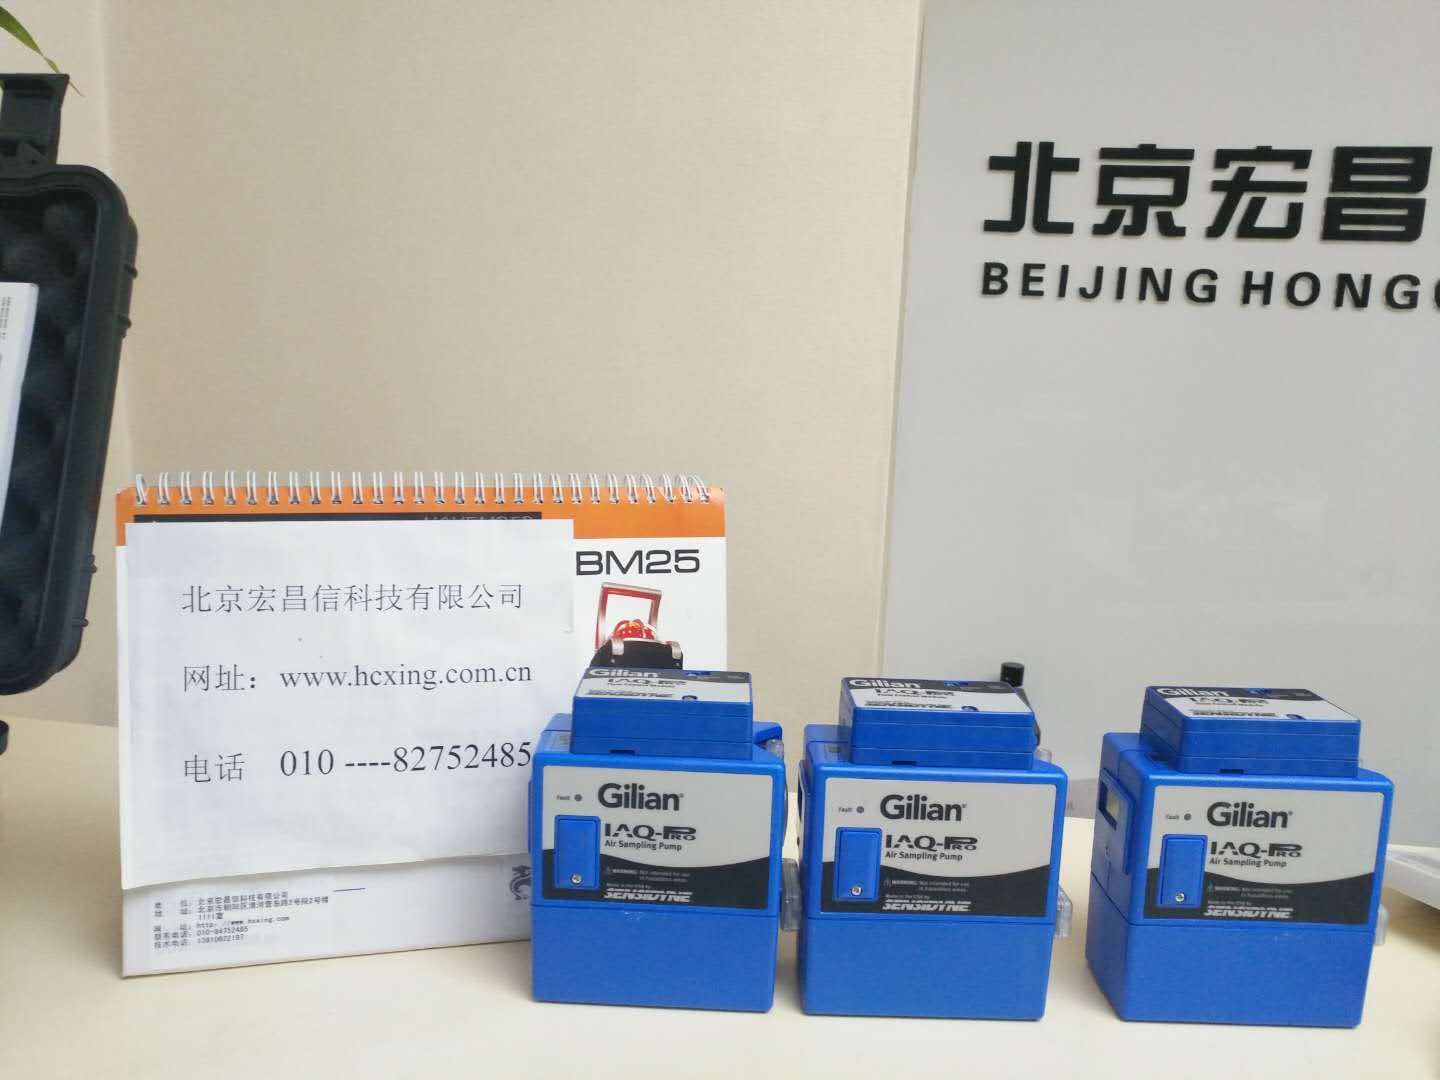 IAQ-Pro 流量空气采样泵北京宏昌信科技有限公司销售部